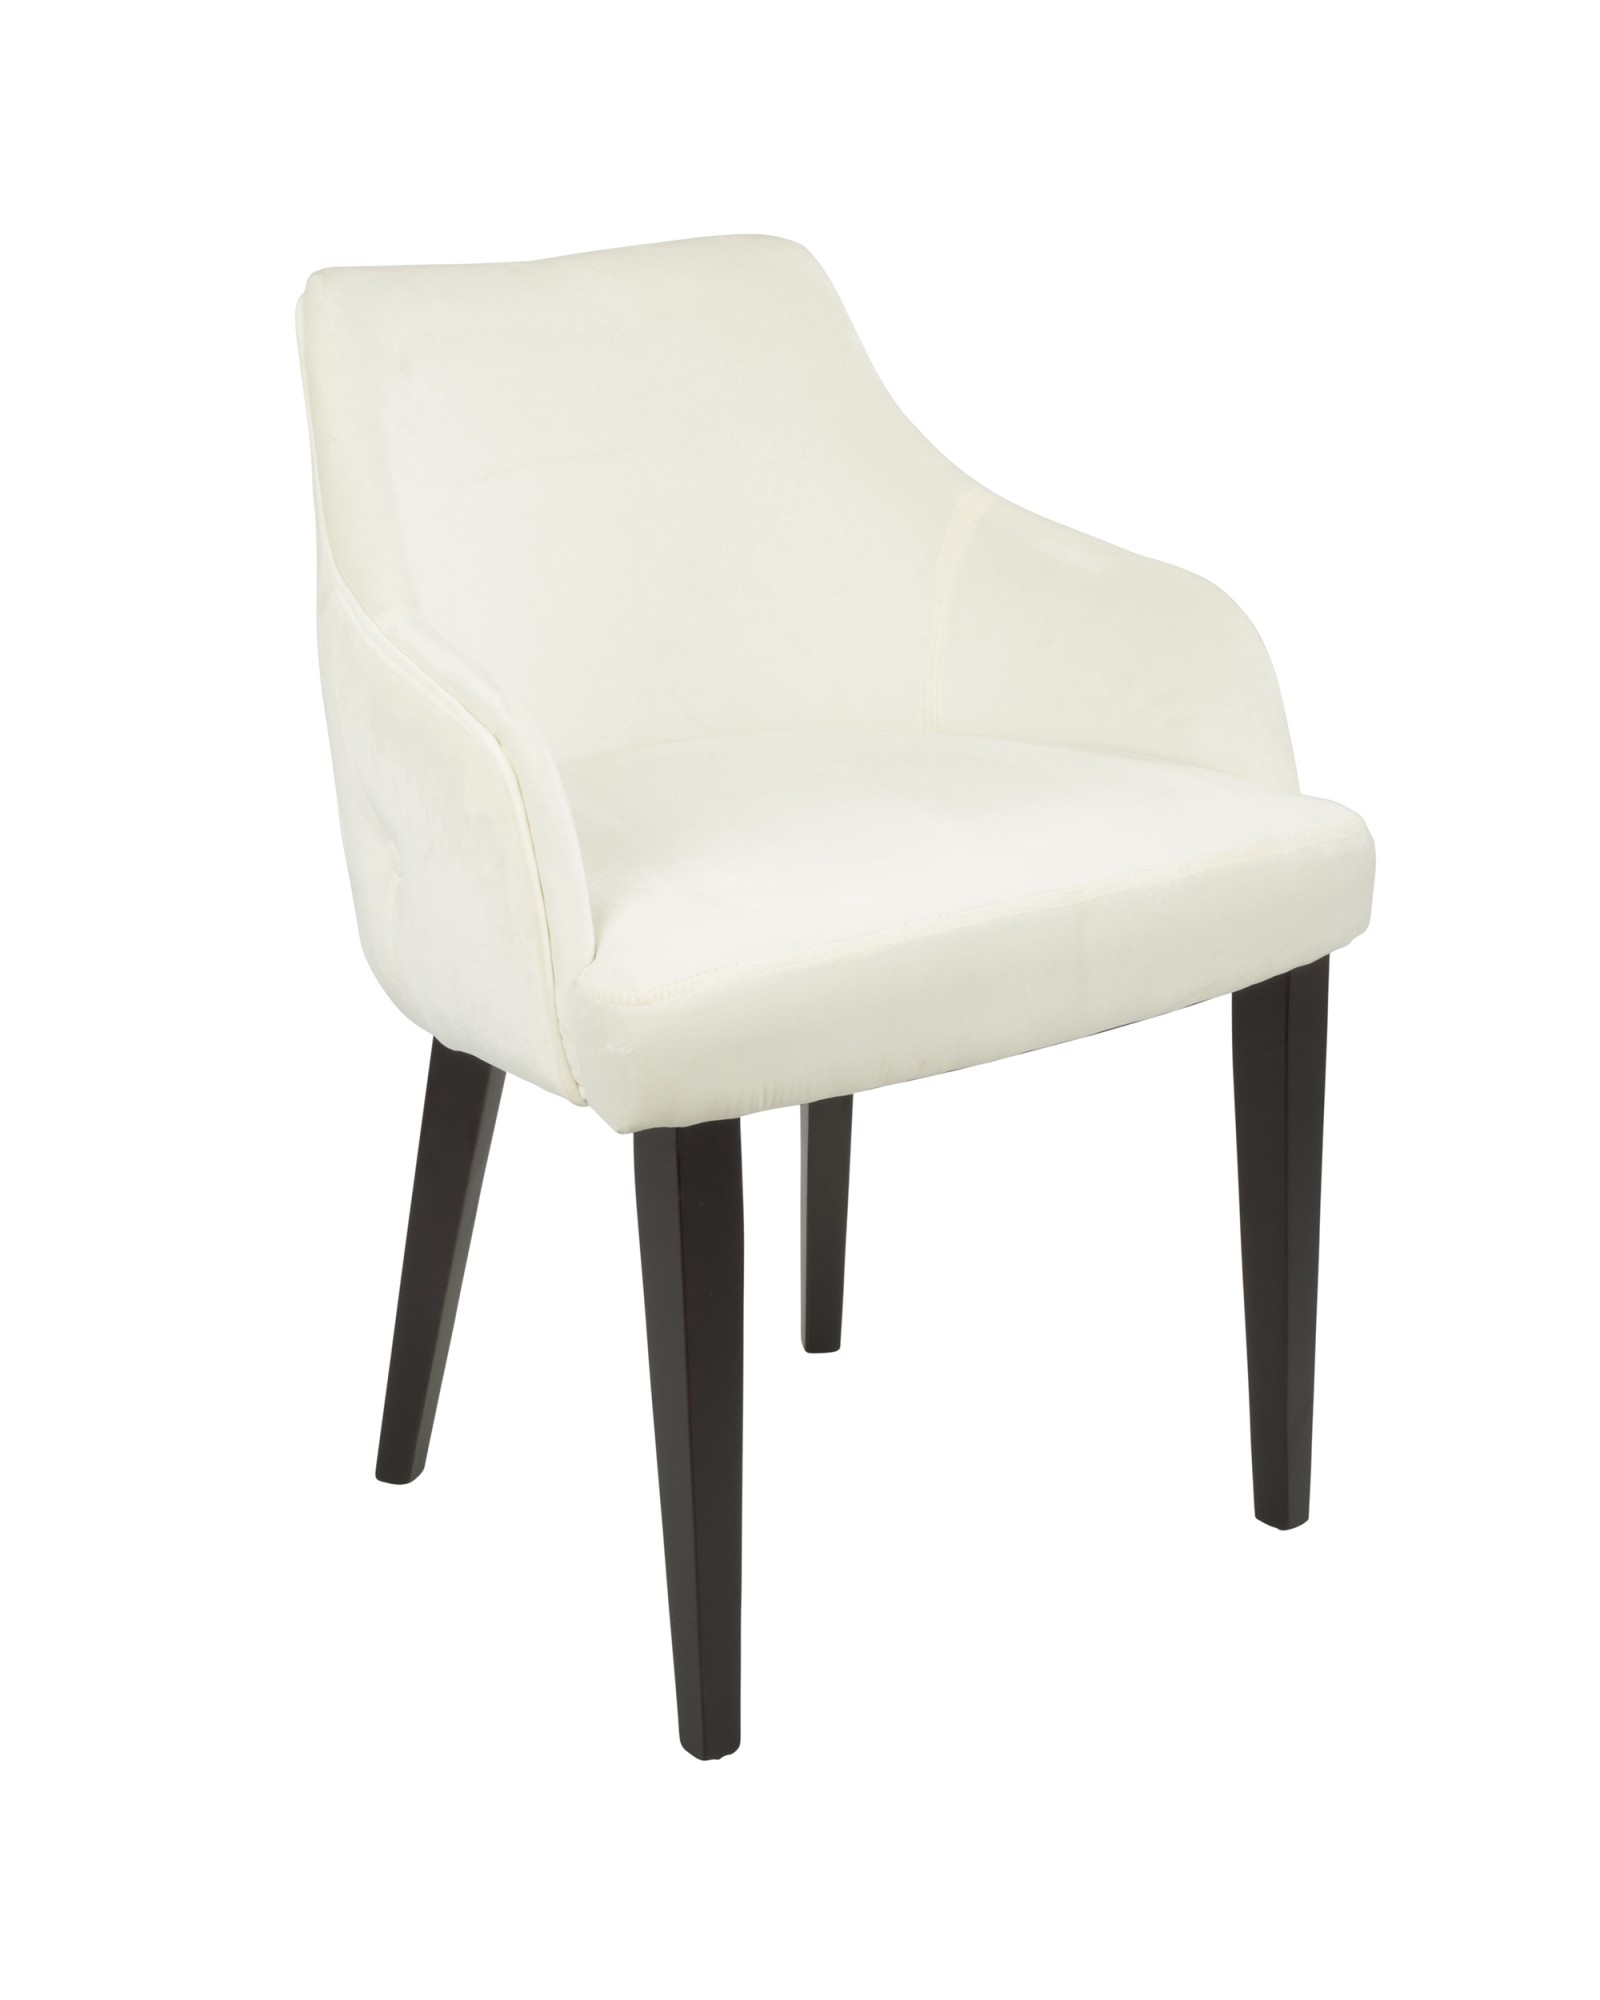 Eliza Contemporary Dining Chair in Espresso with Cream Velvet - Set of 2